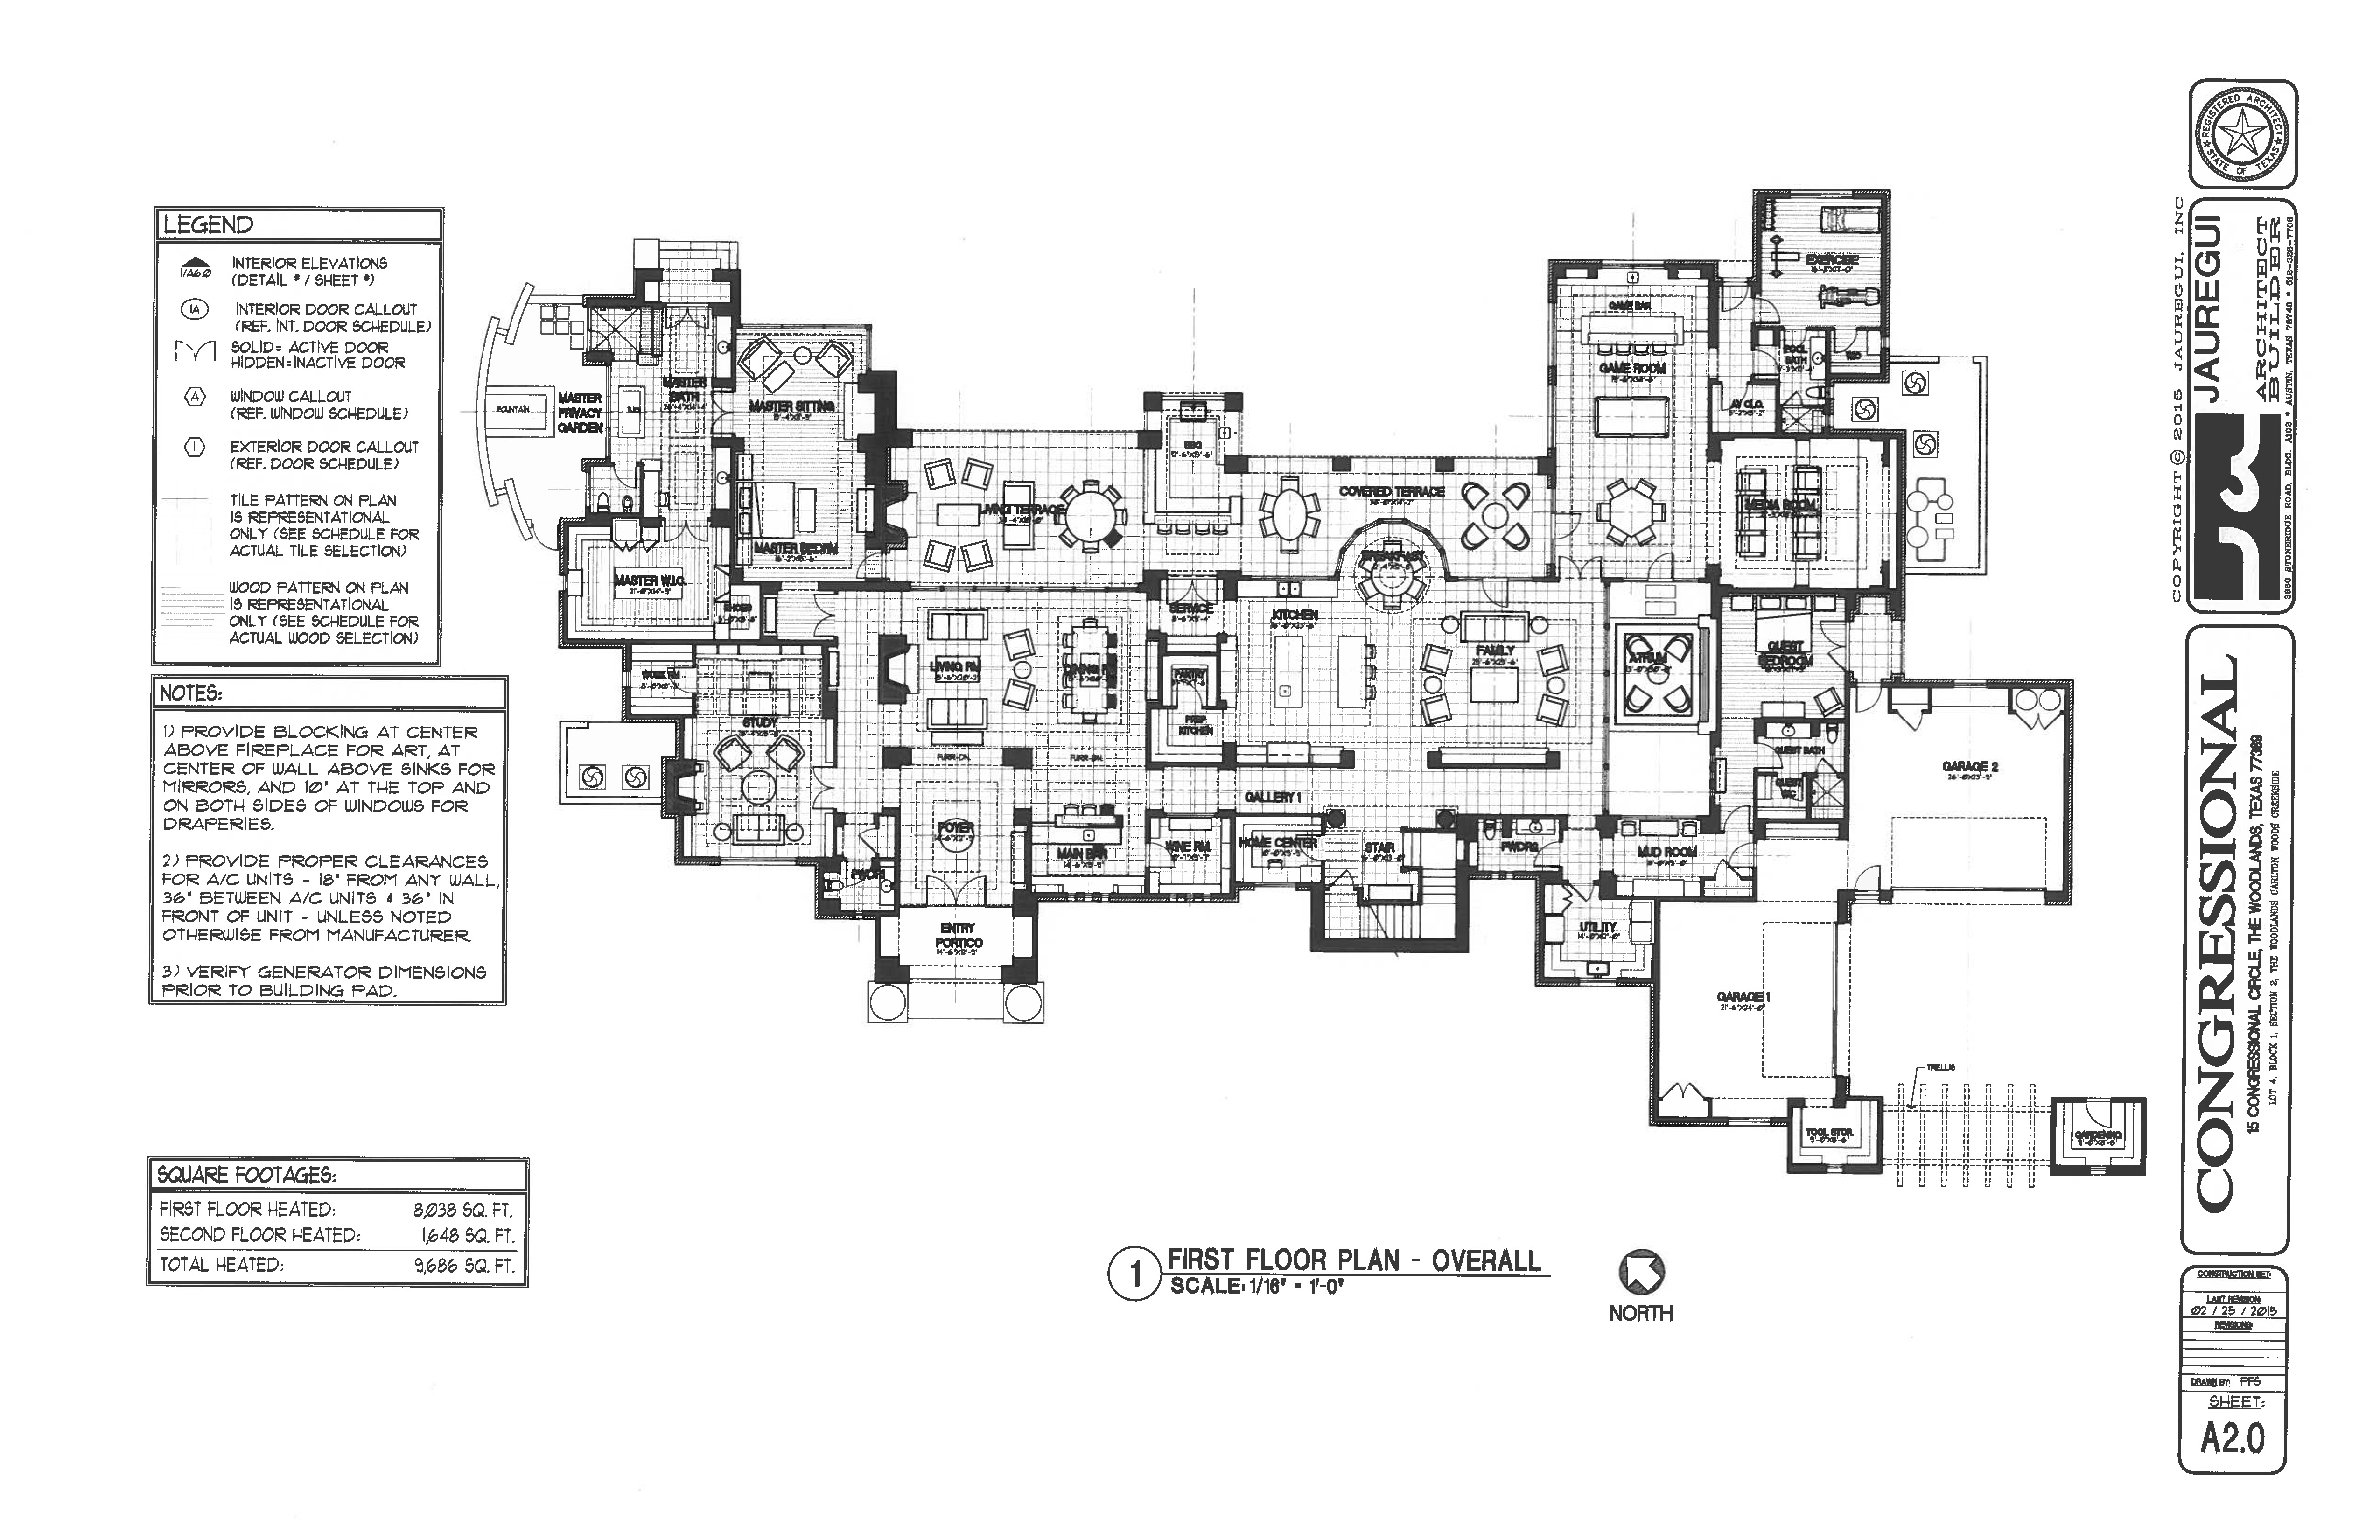 Congressional Site Plan and floor plans_Page_2 Jauregui